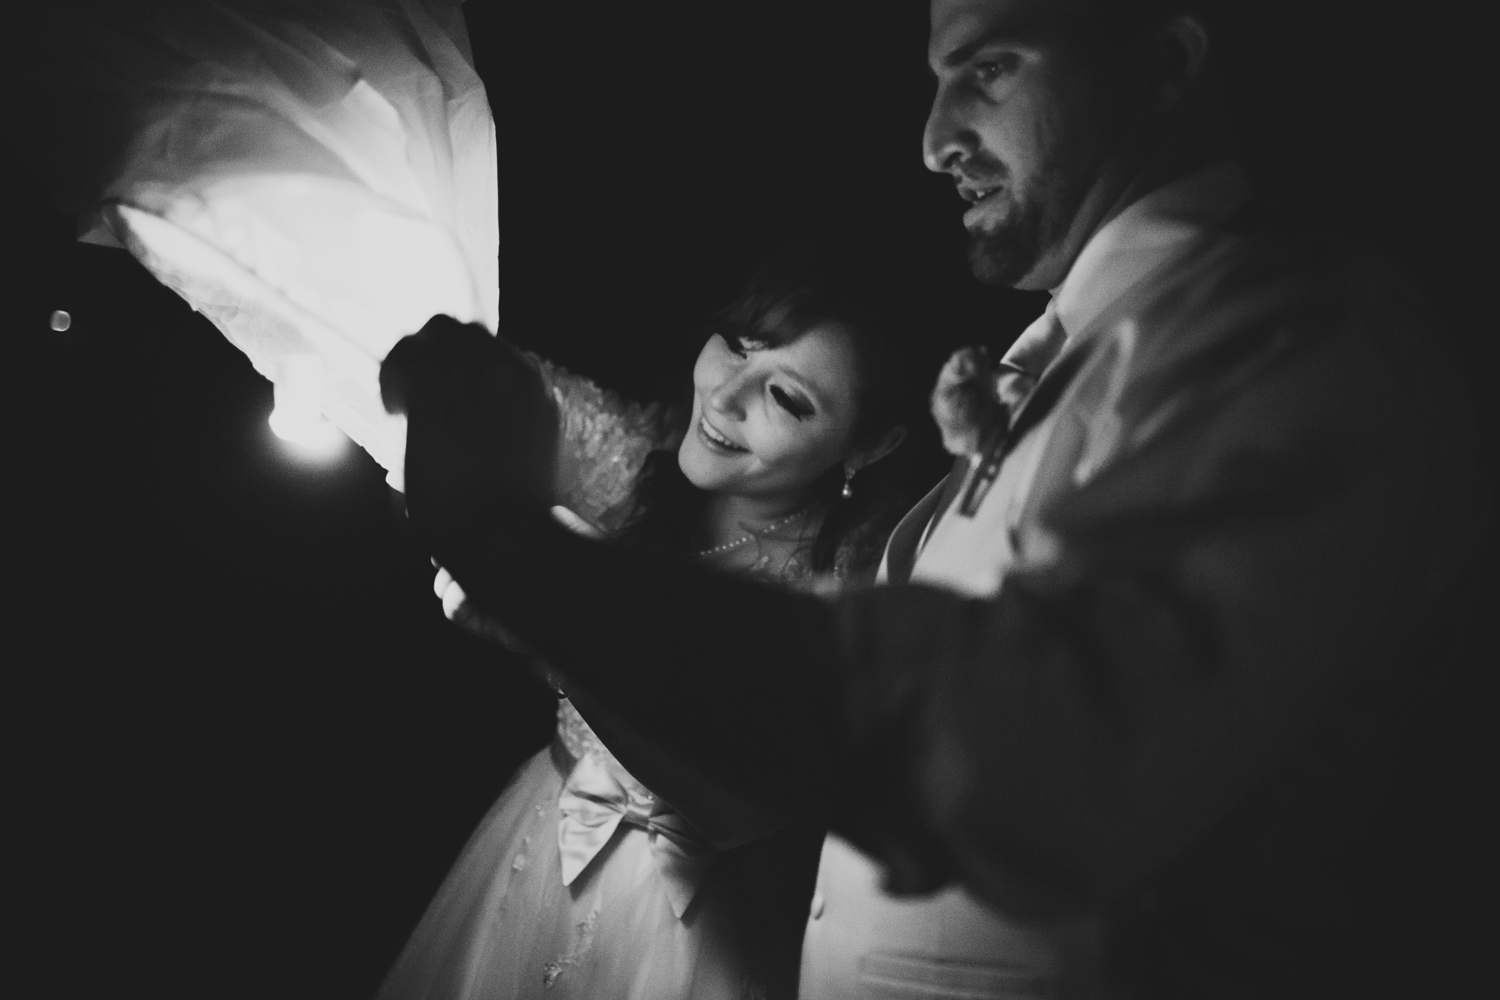 chinese lantern wedding sendoff in michigan